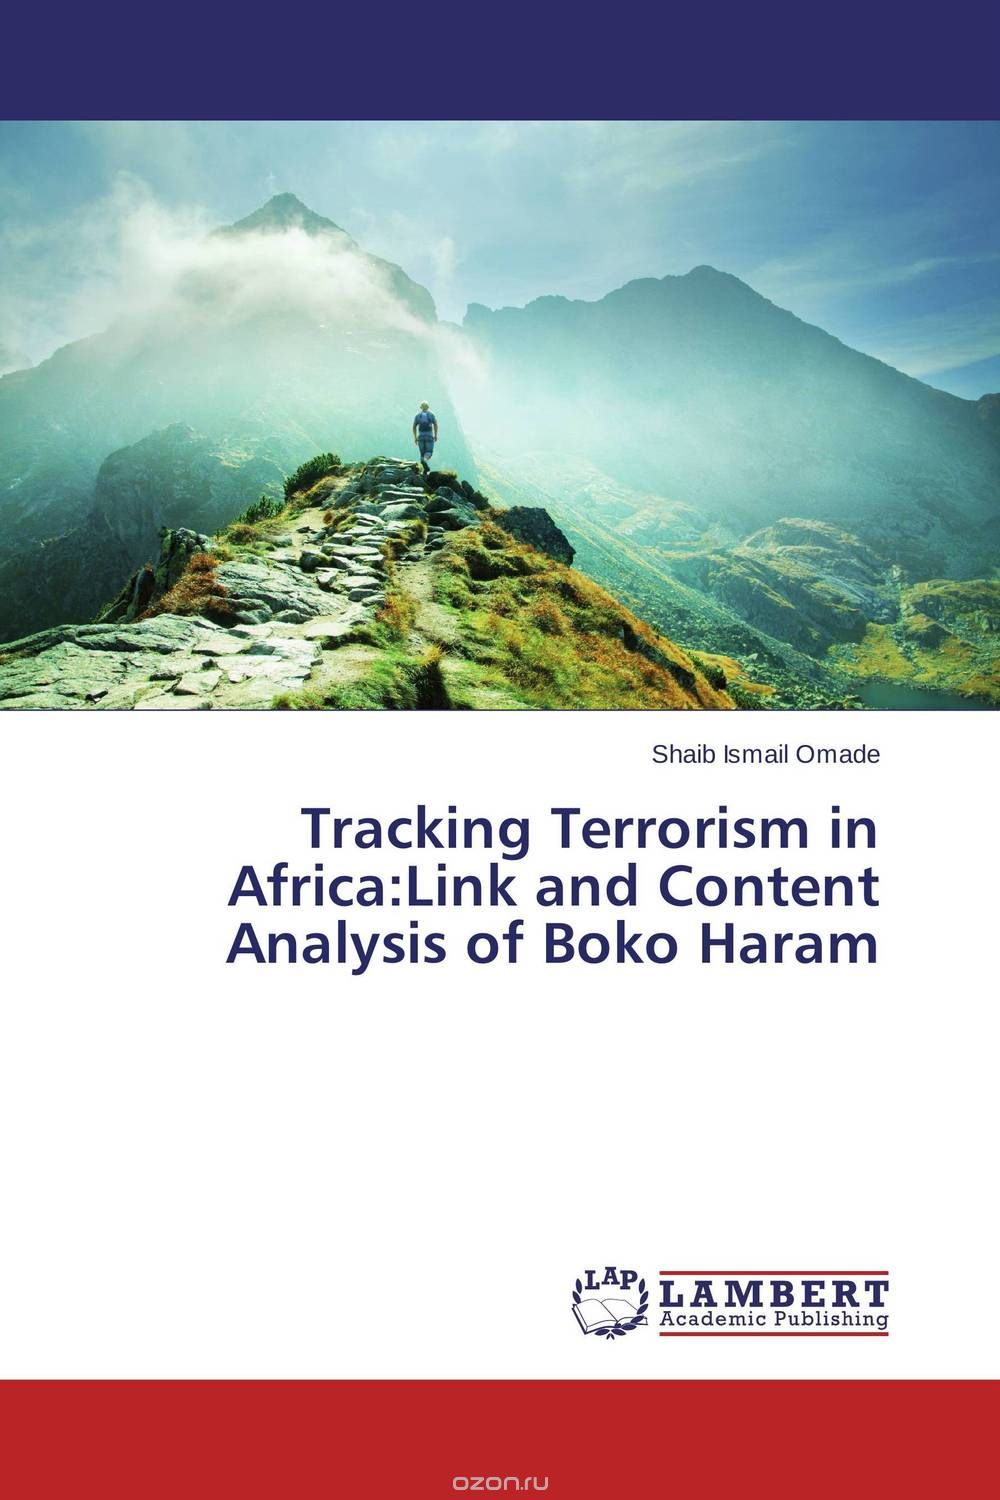 Скачать книгу "Tracking Terrorism in Africa:Link and Content Analysis of Boko Haram"